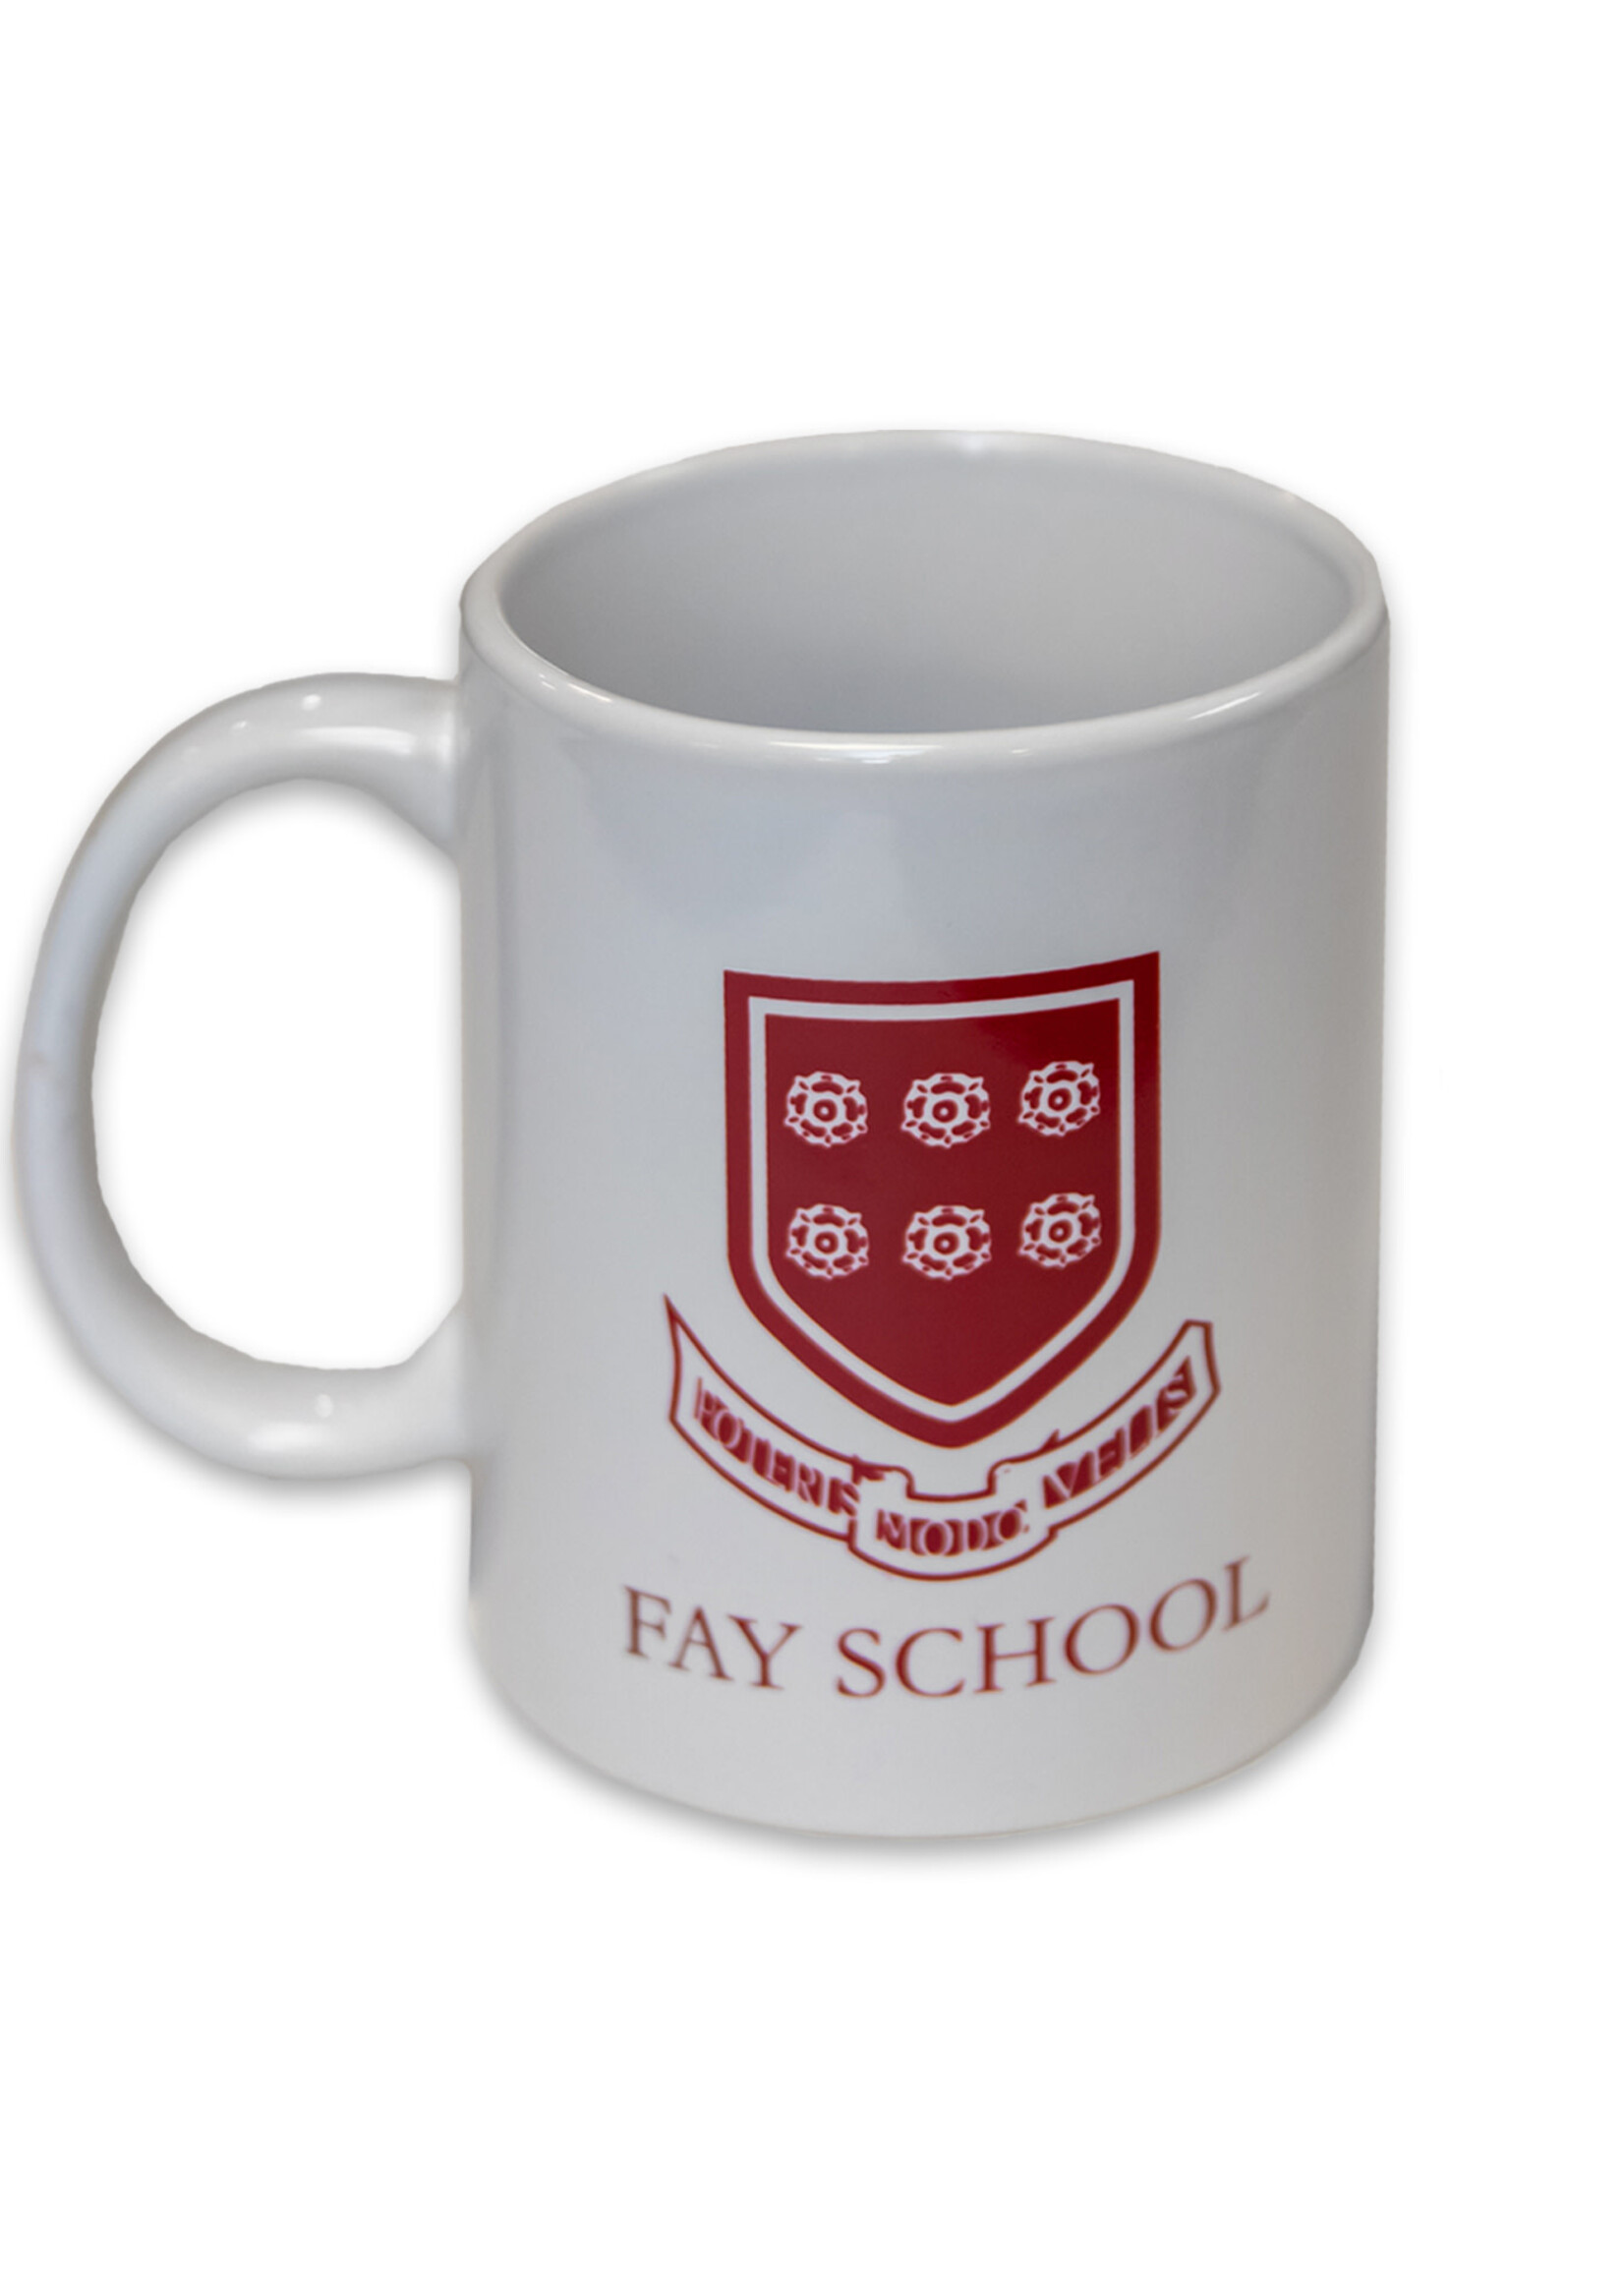 White Mug Red Fay crest logo